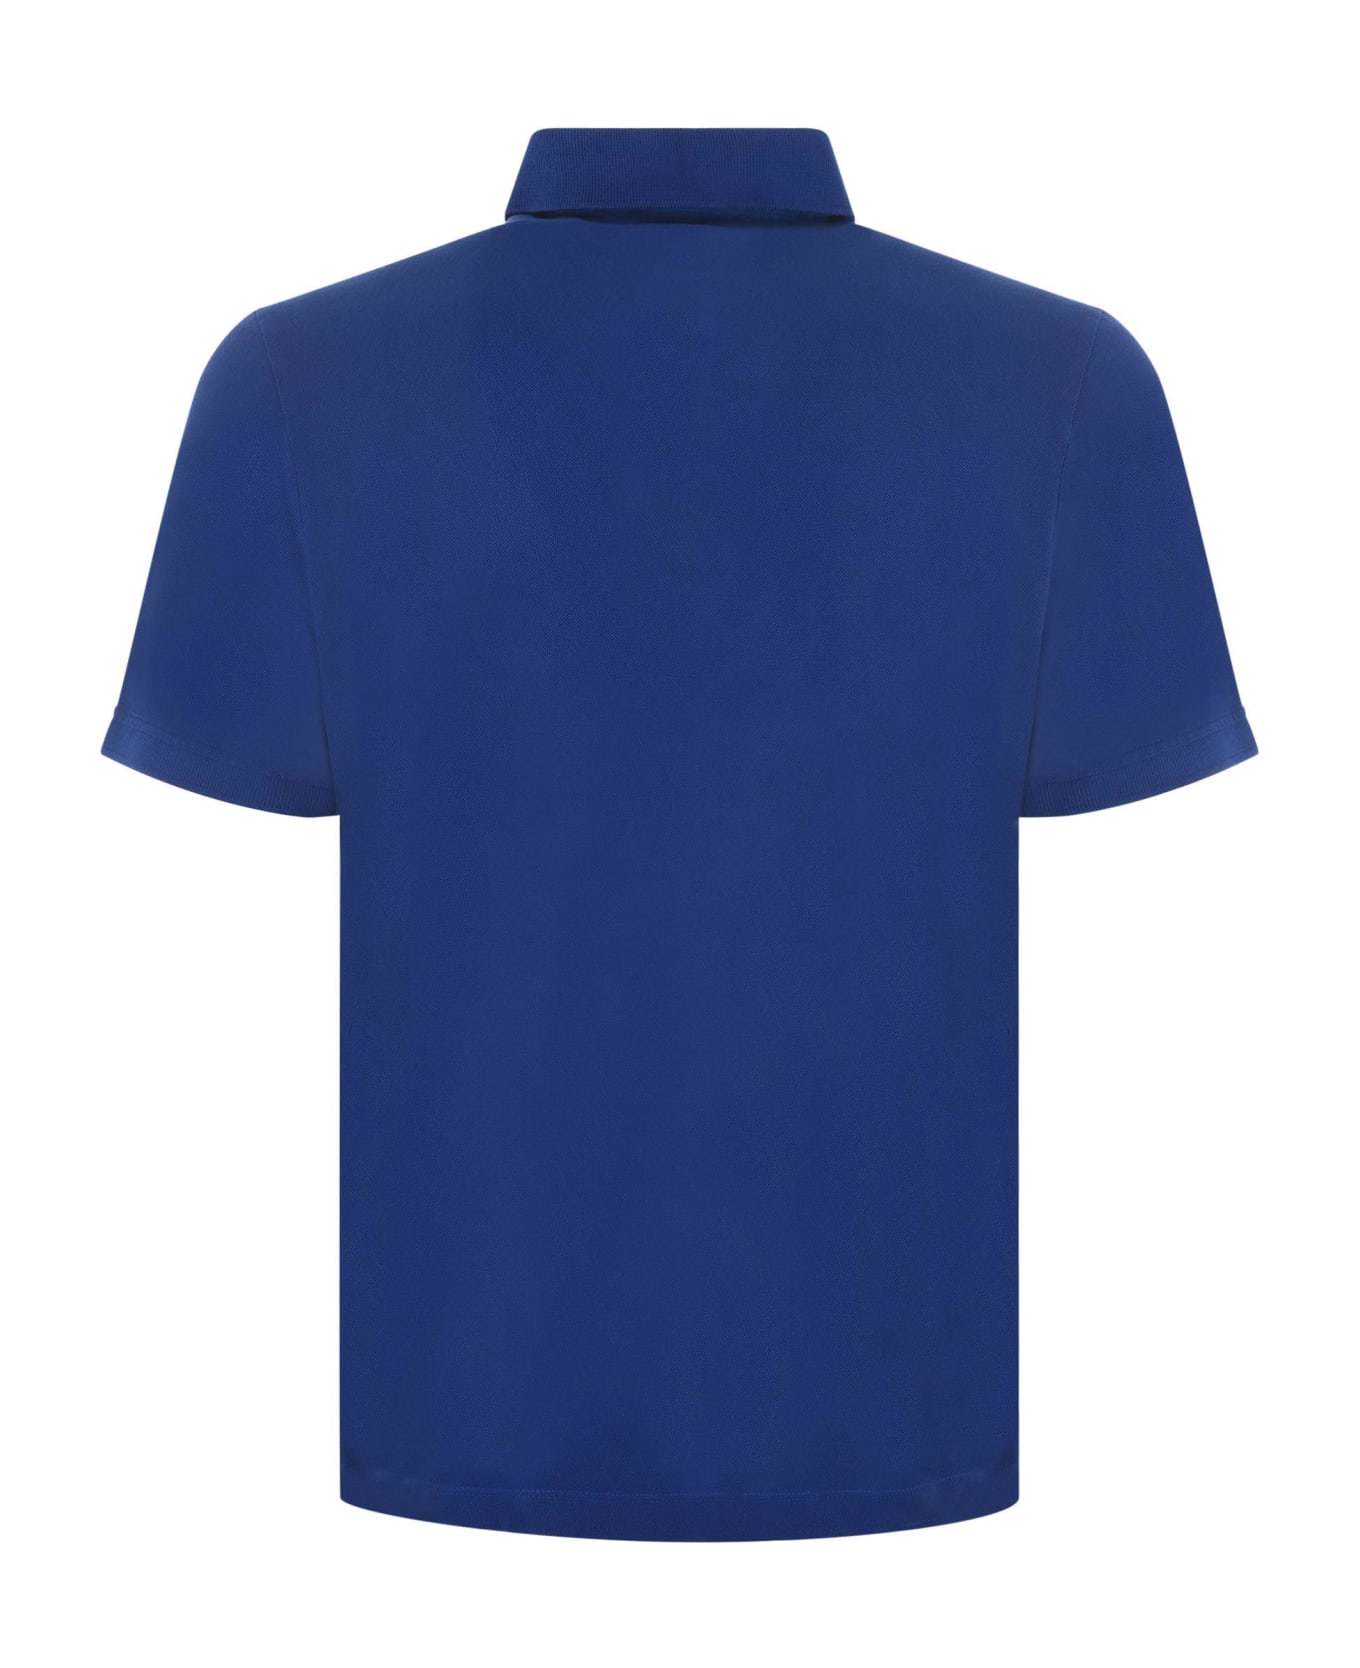 Blauer Polo Shirt - Blu cobalto